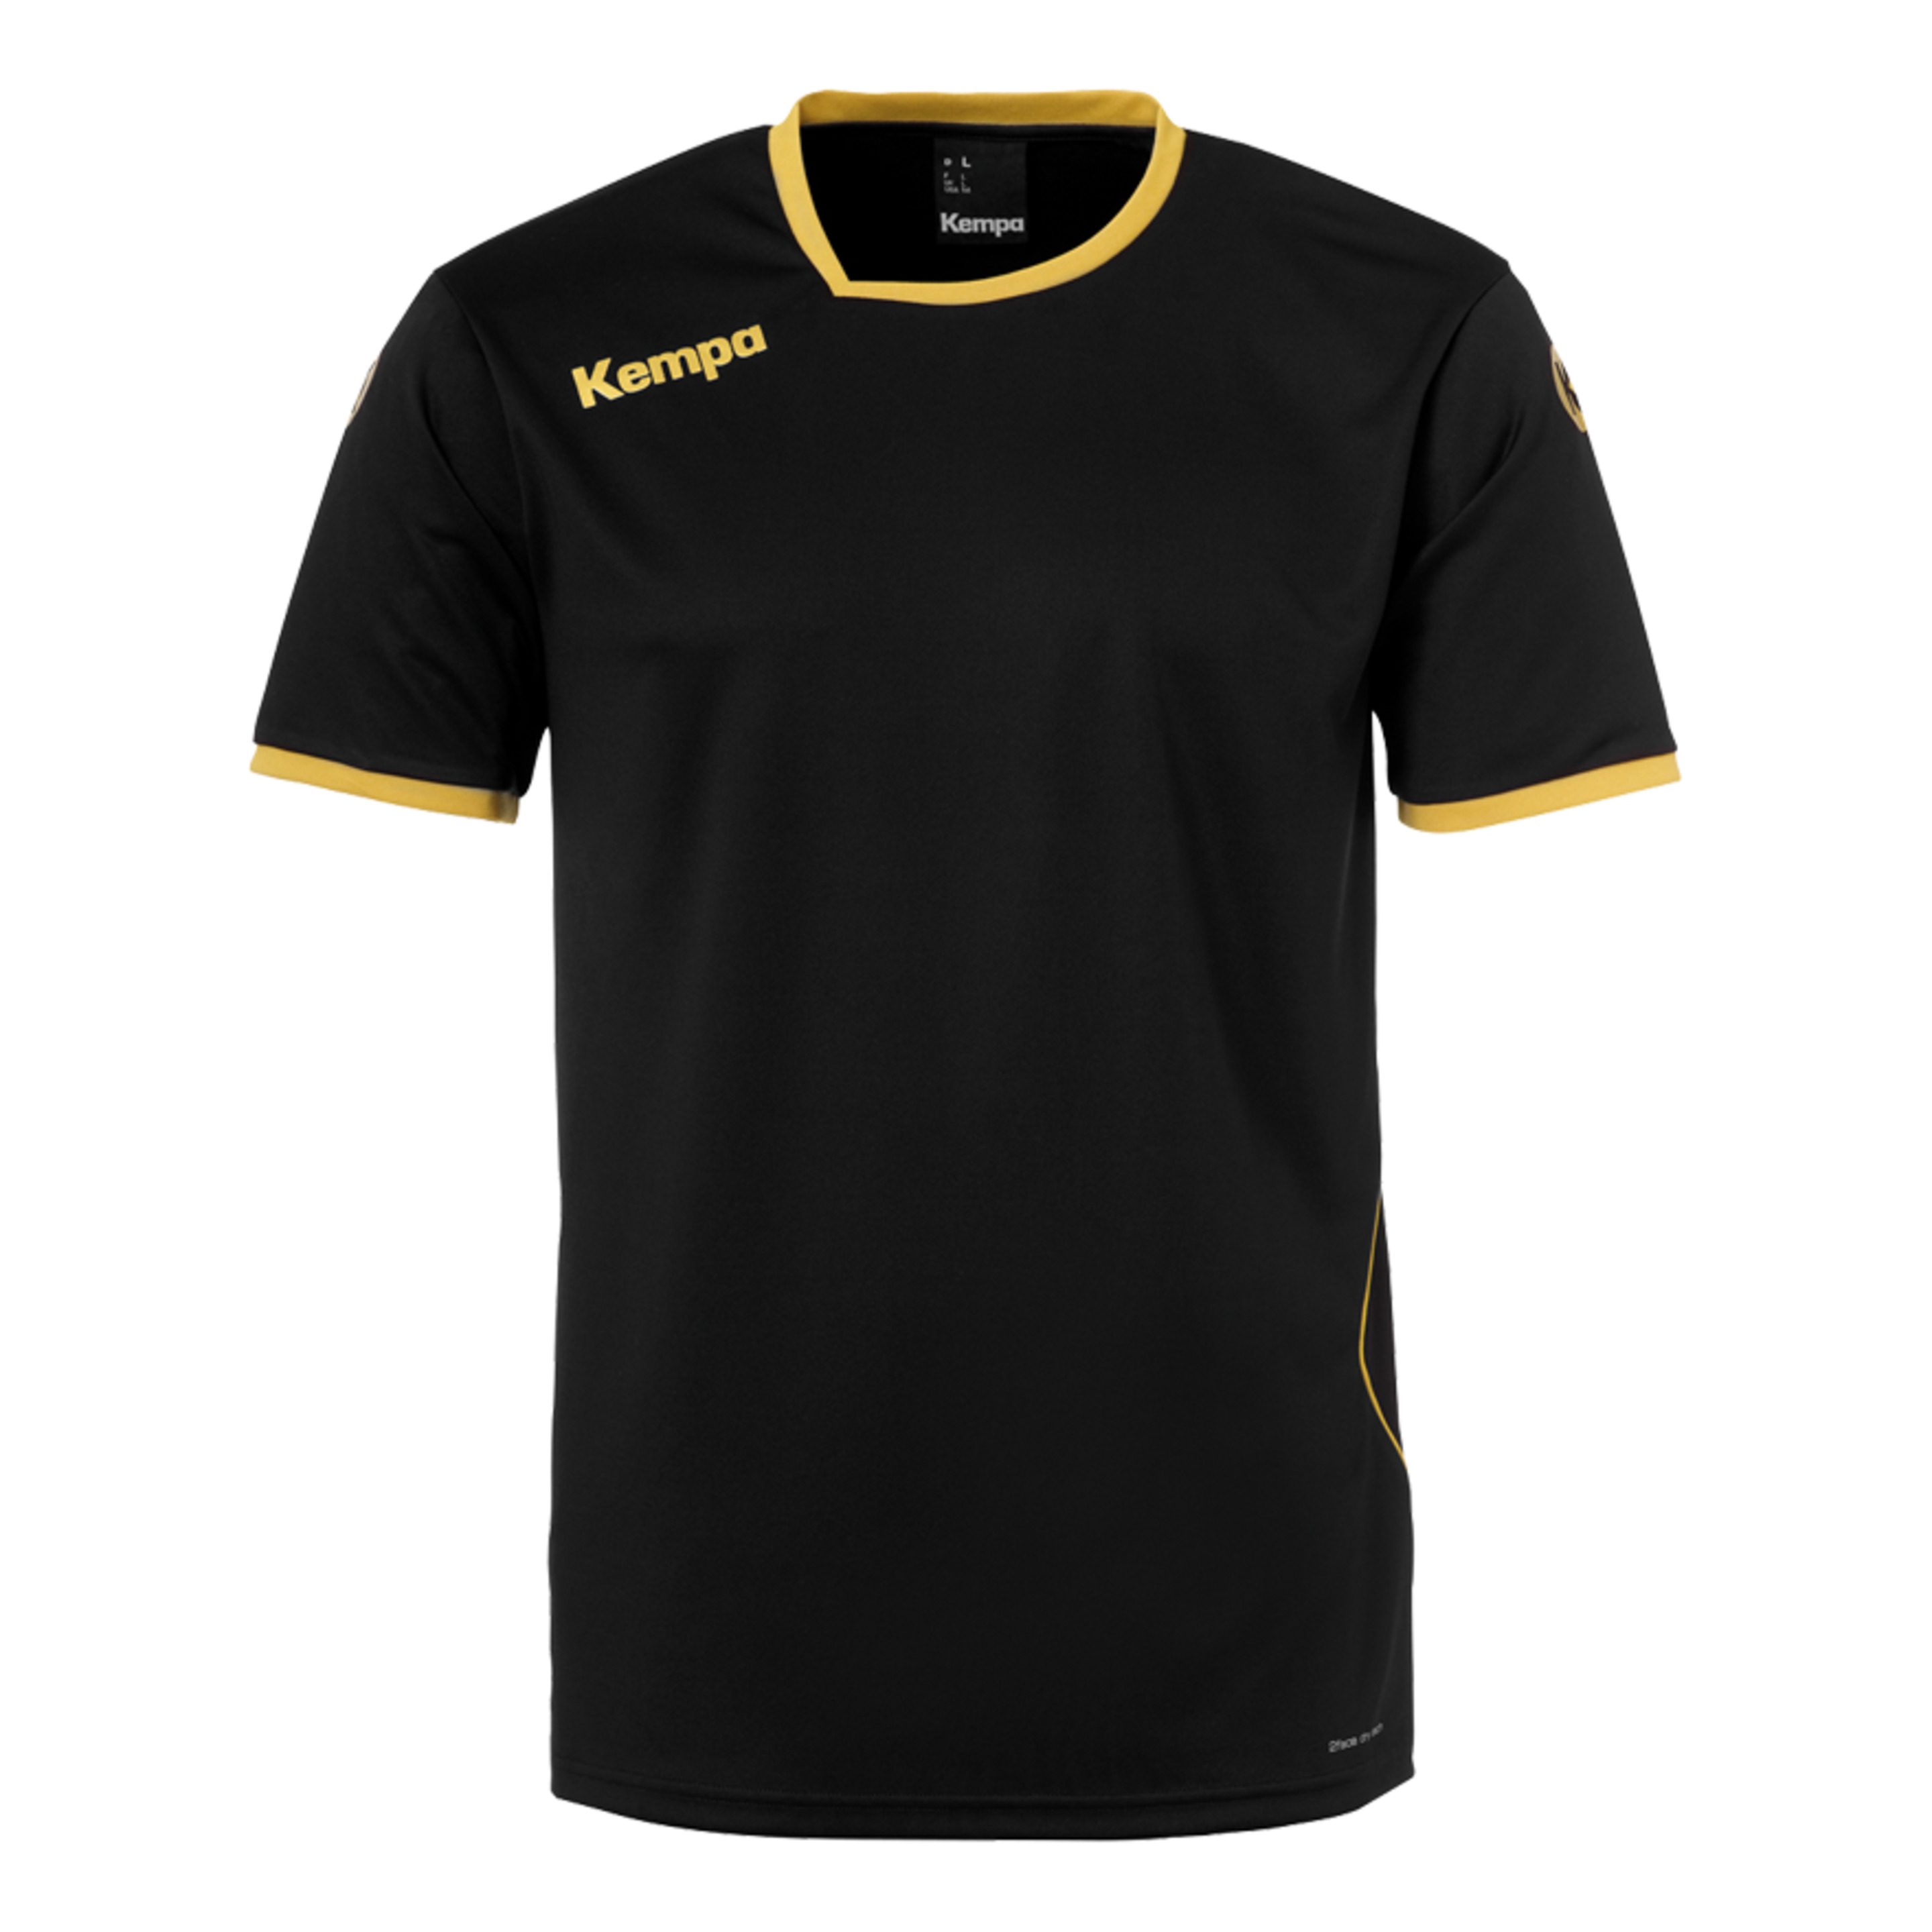 Curve Camiseta Negro/dorado Kempa